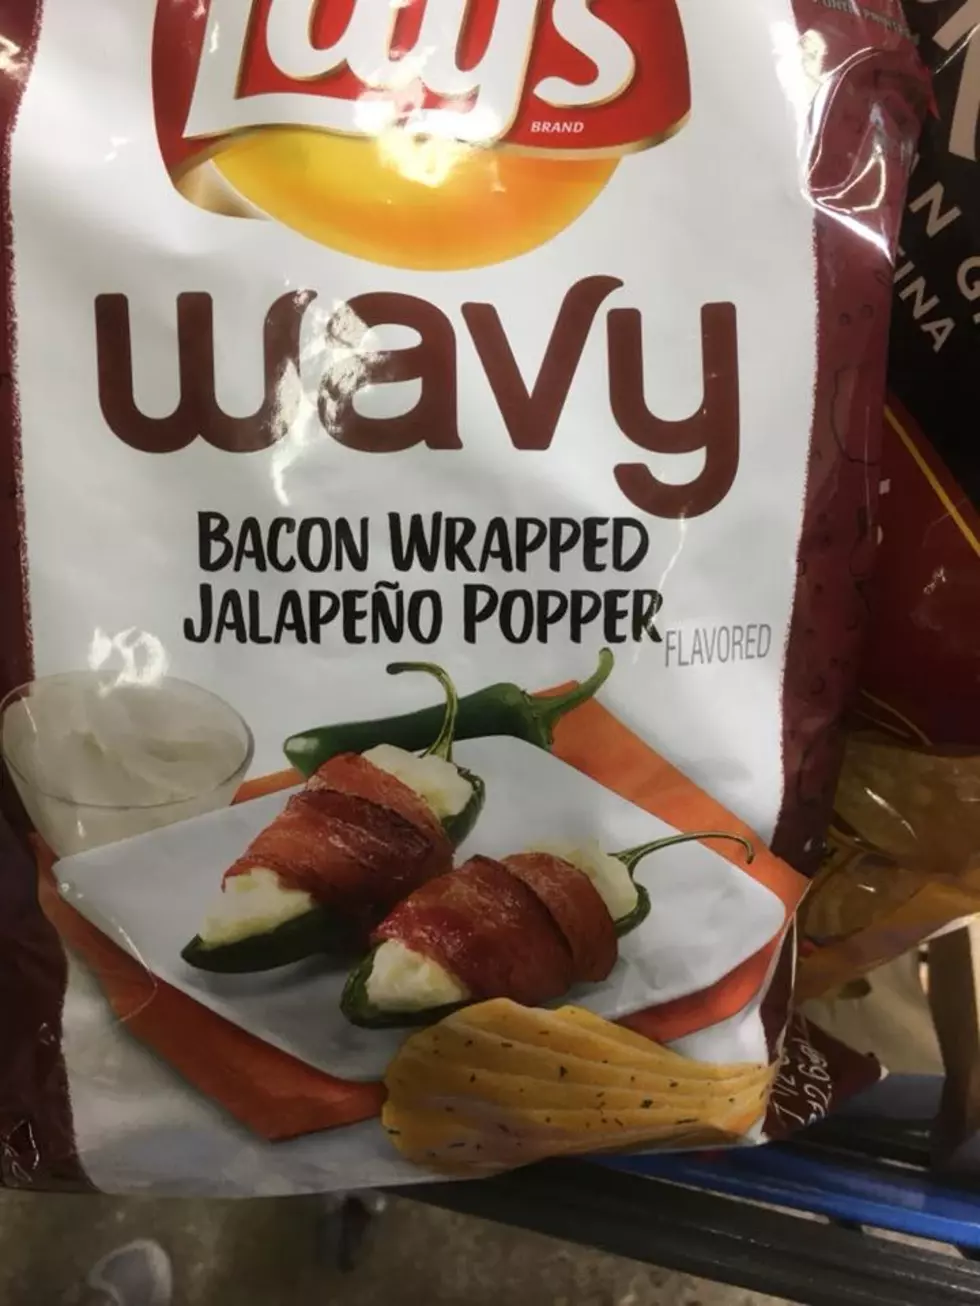 Amazing Snack Sighting At WalMart